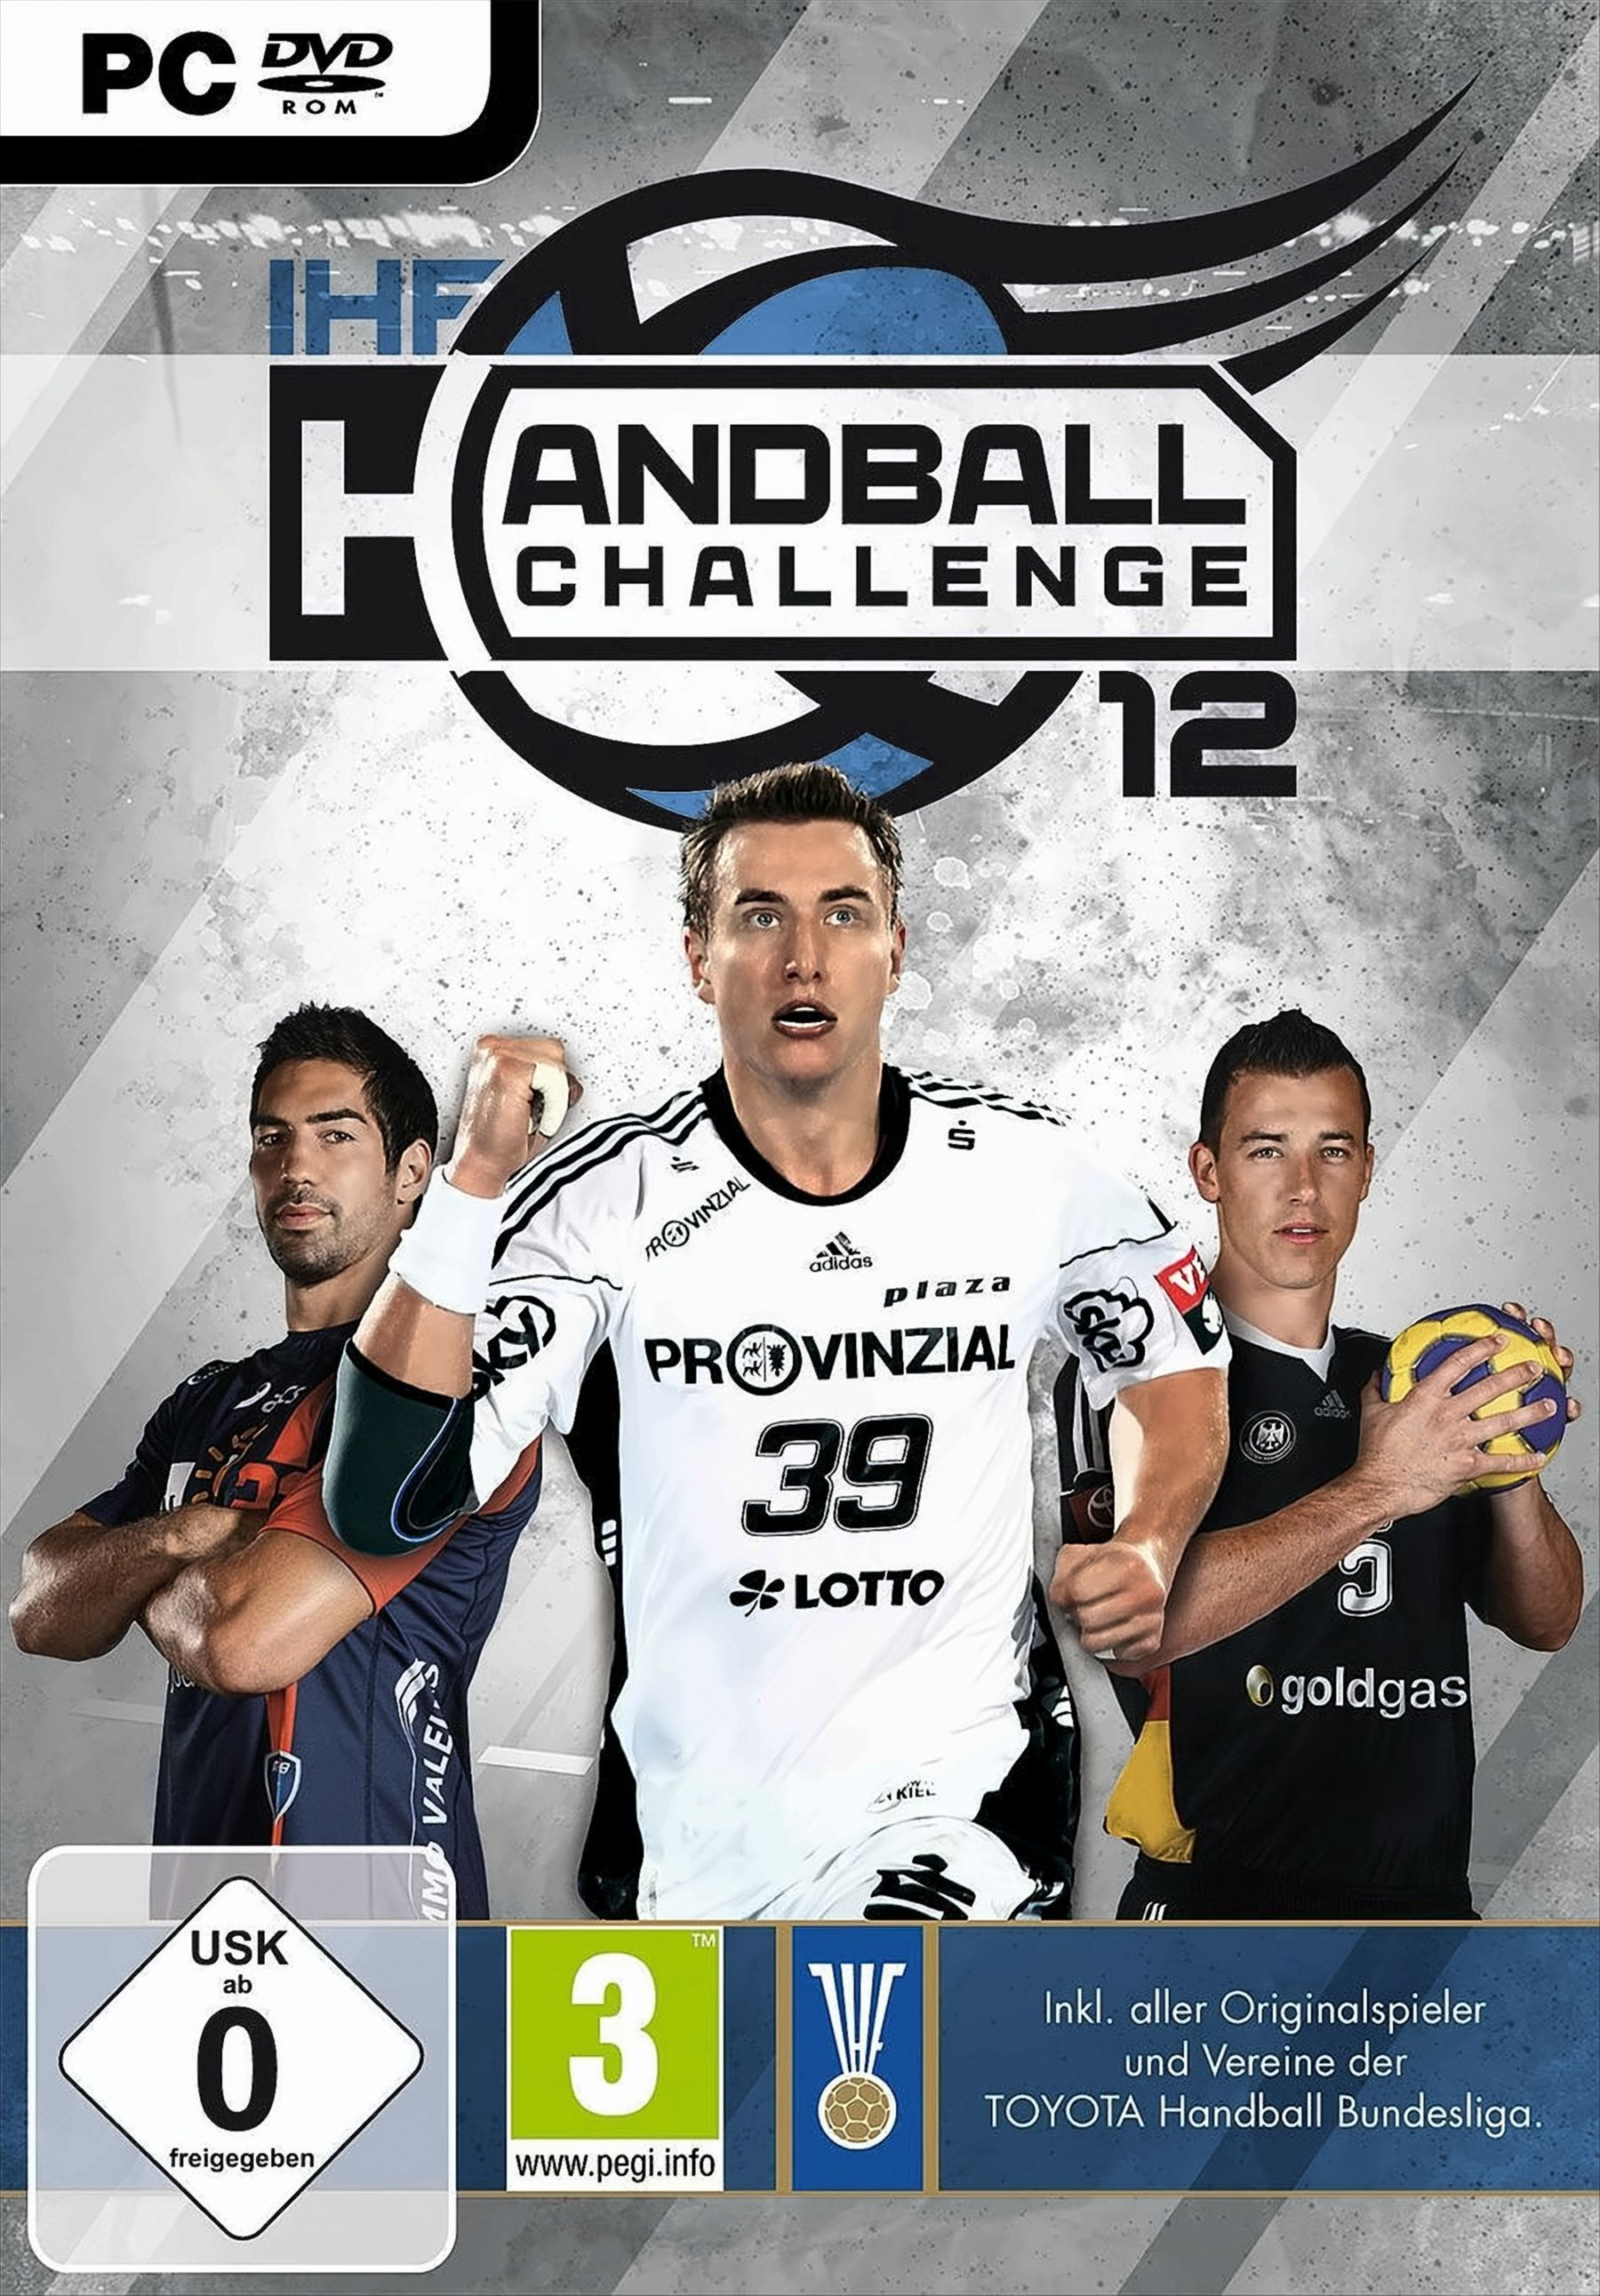 IHF Handball - [PC] Challenge [PC] - 12